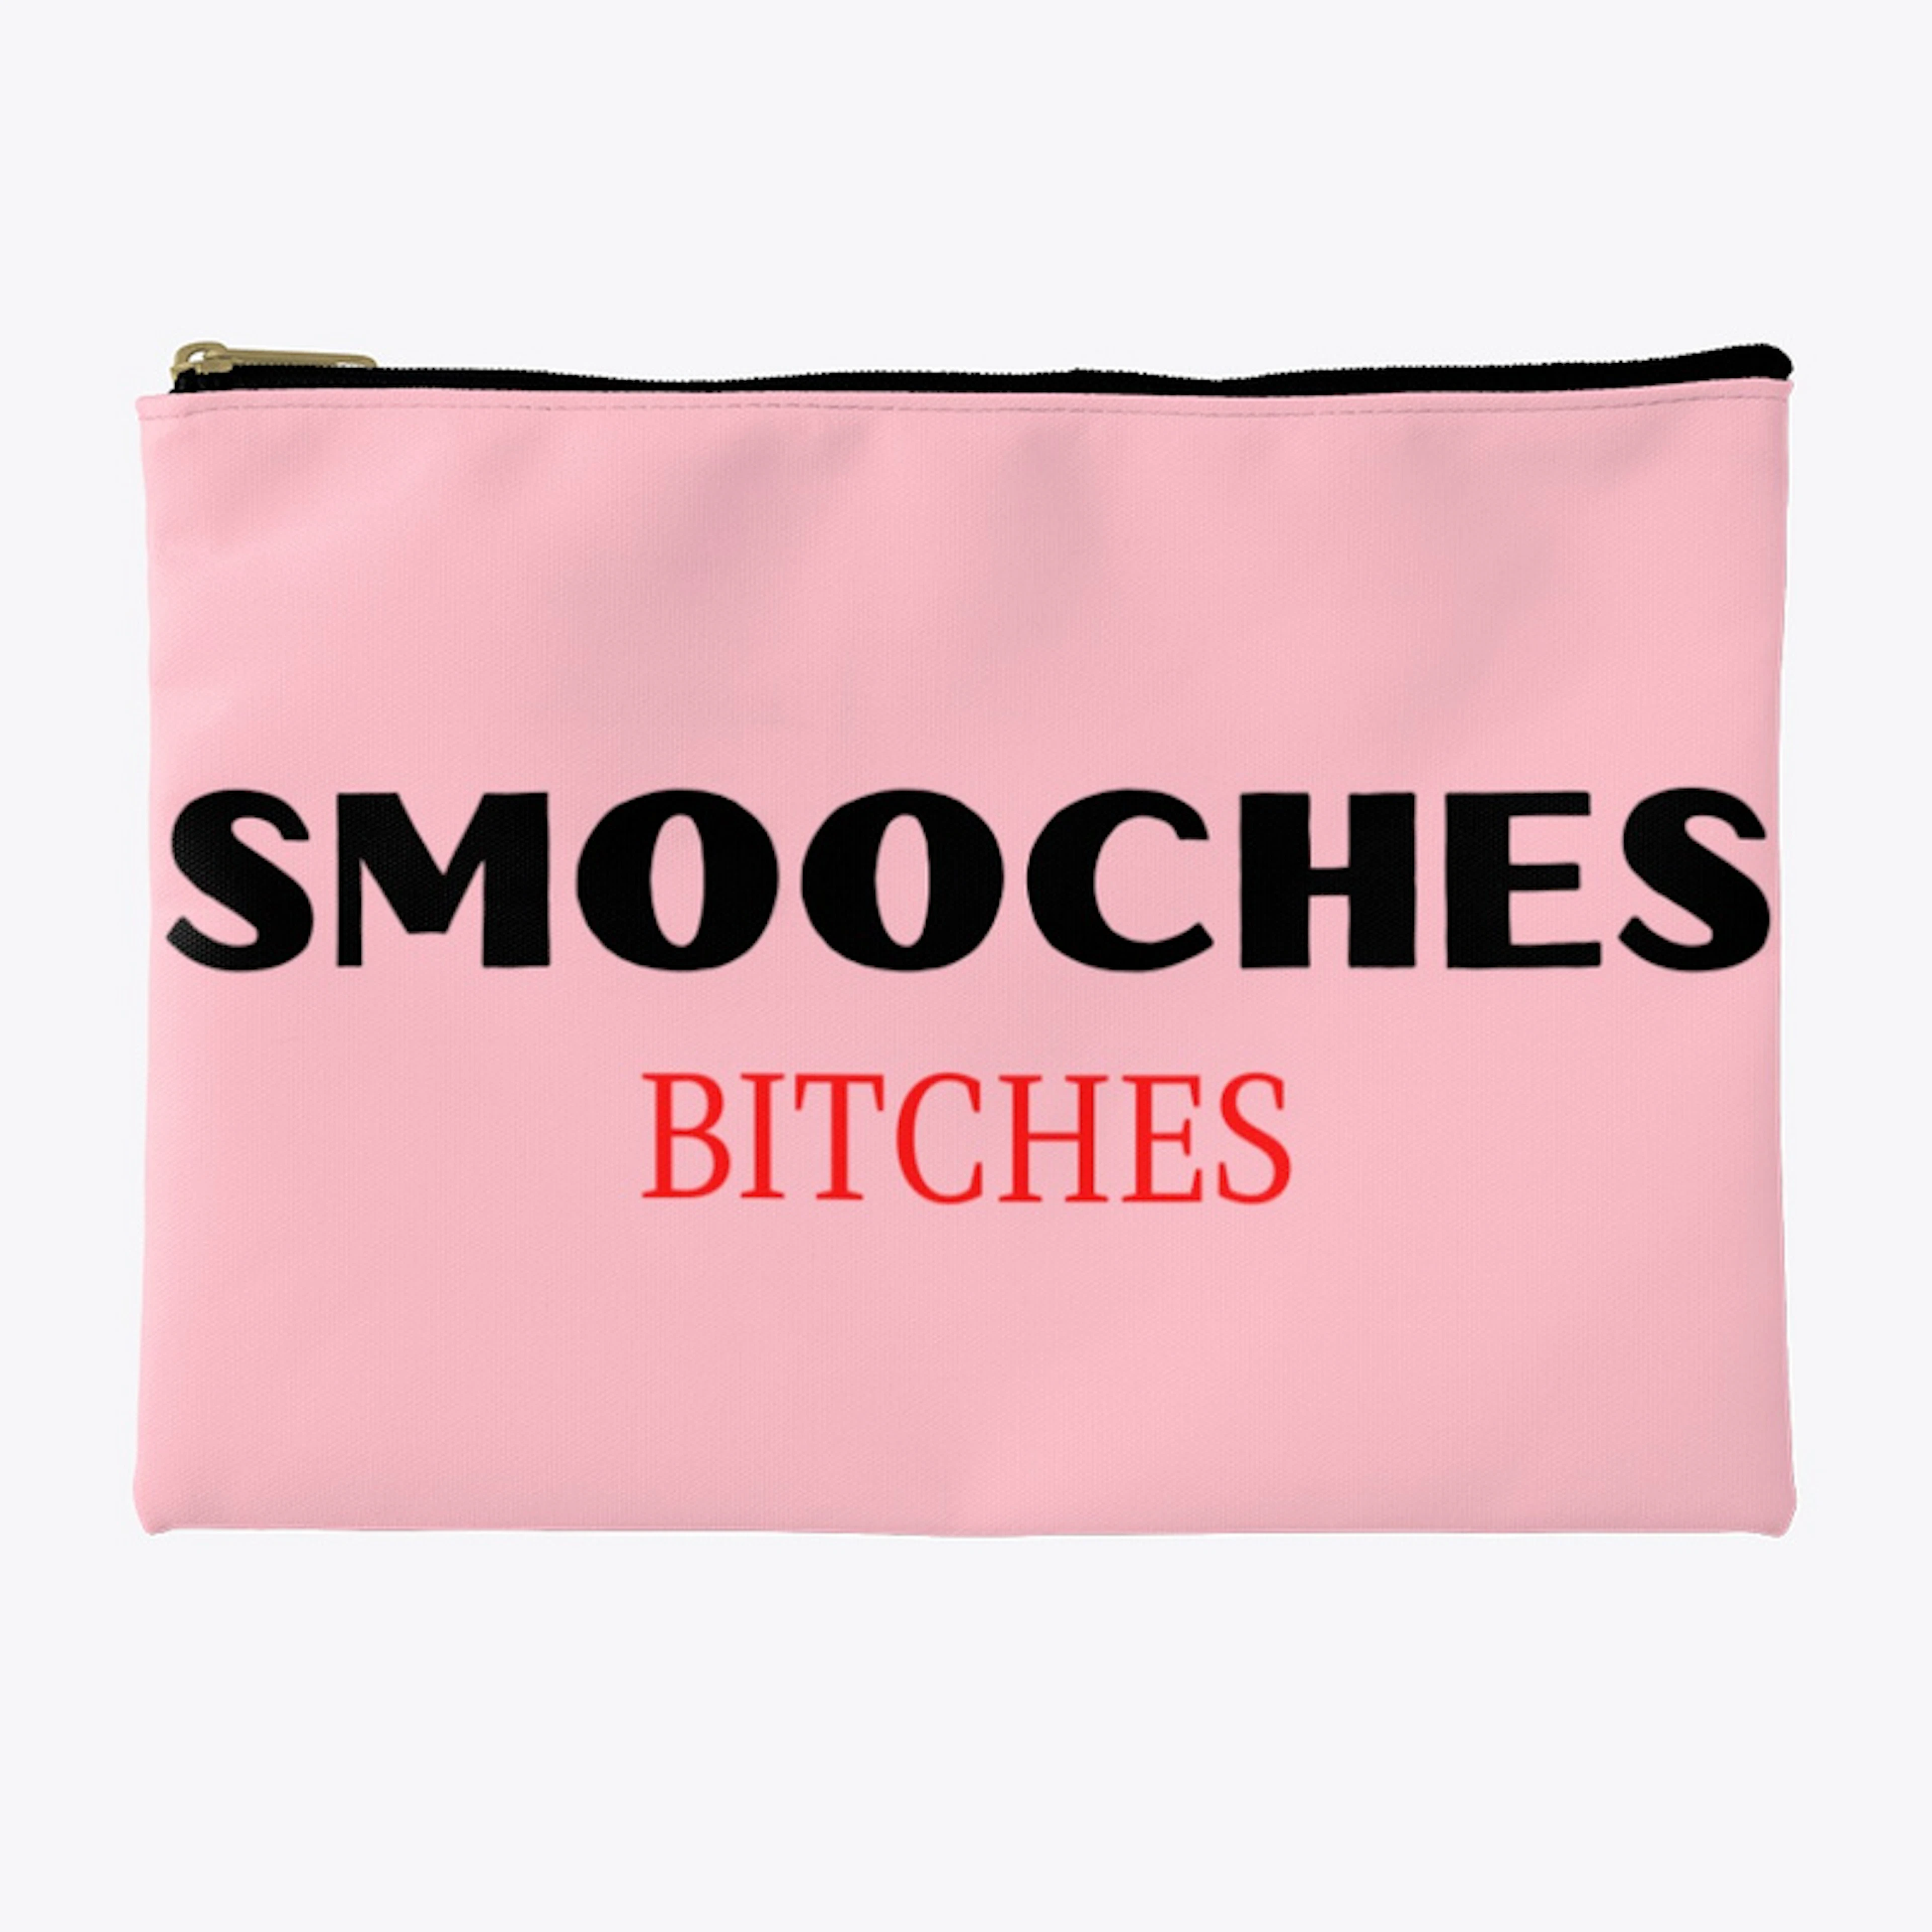 Smooches Bitches